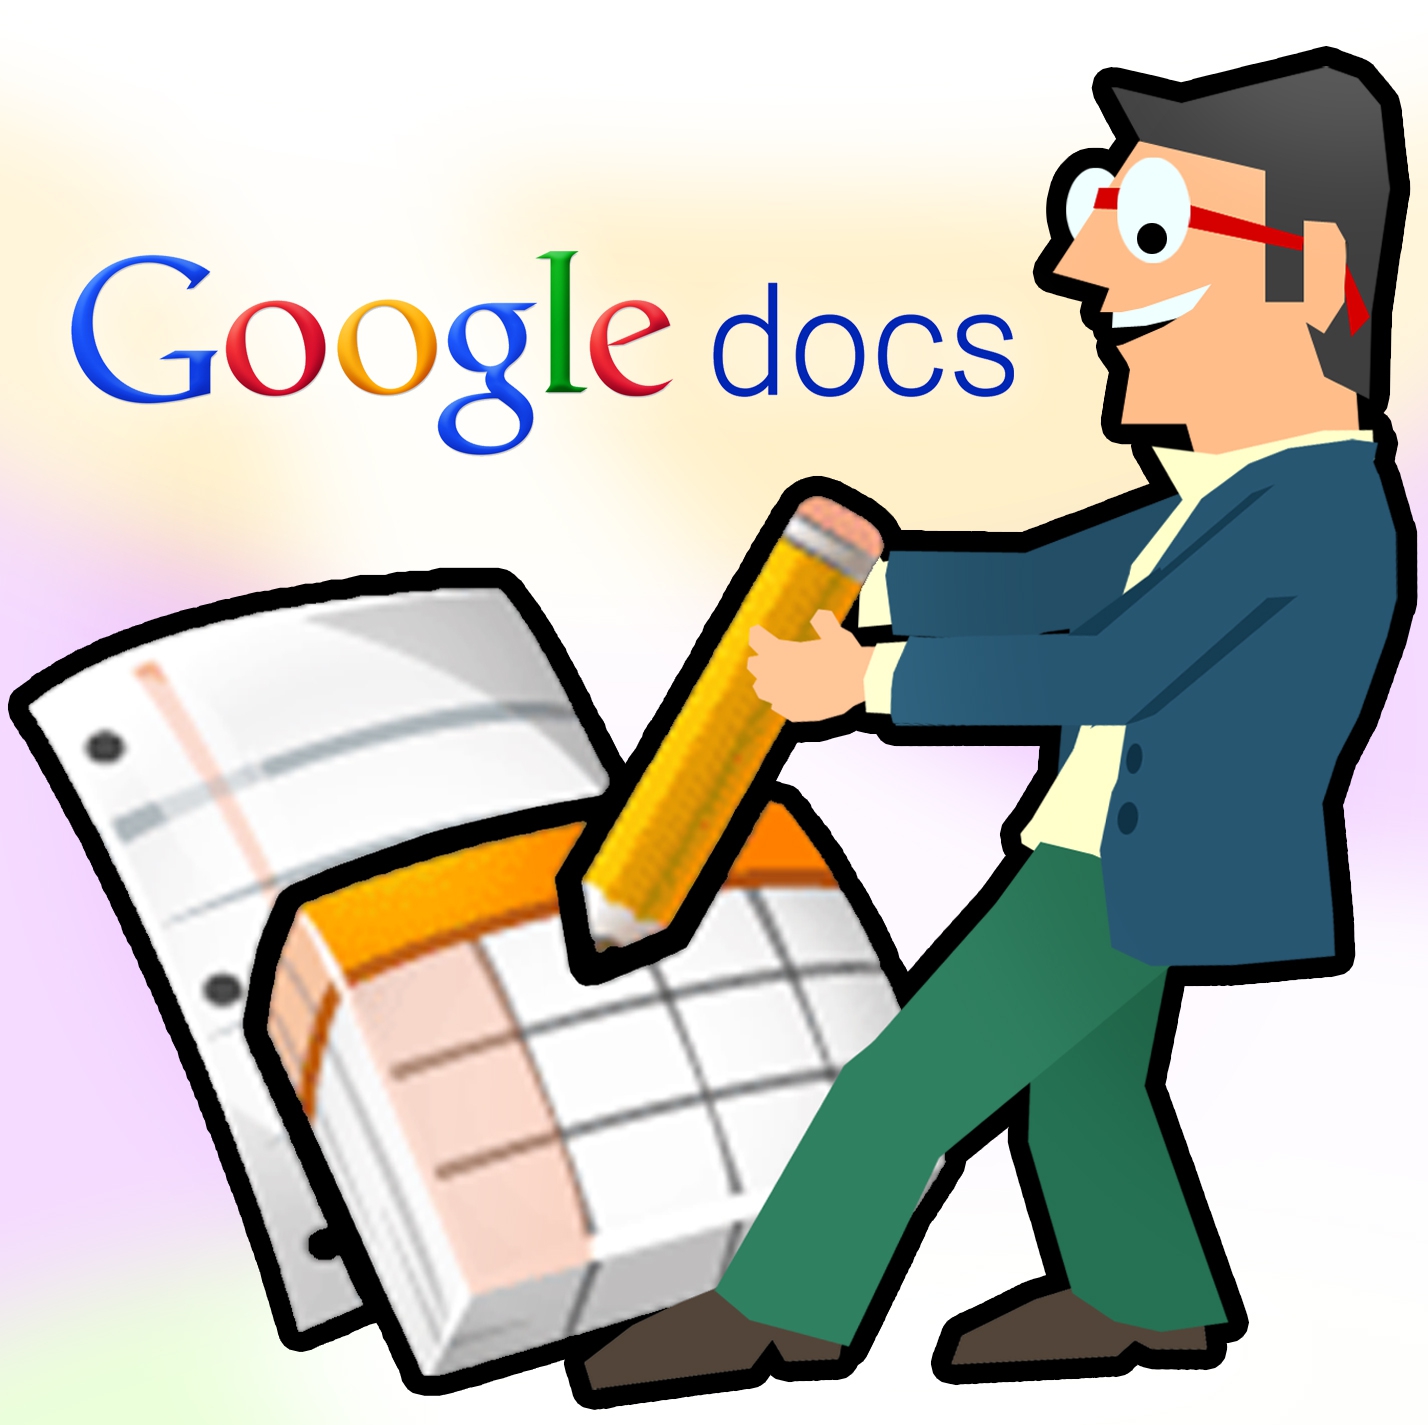 Https docs g. Google docs. Google документы картинки. Google docs документы. Гугл docs картинка.